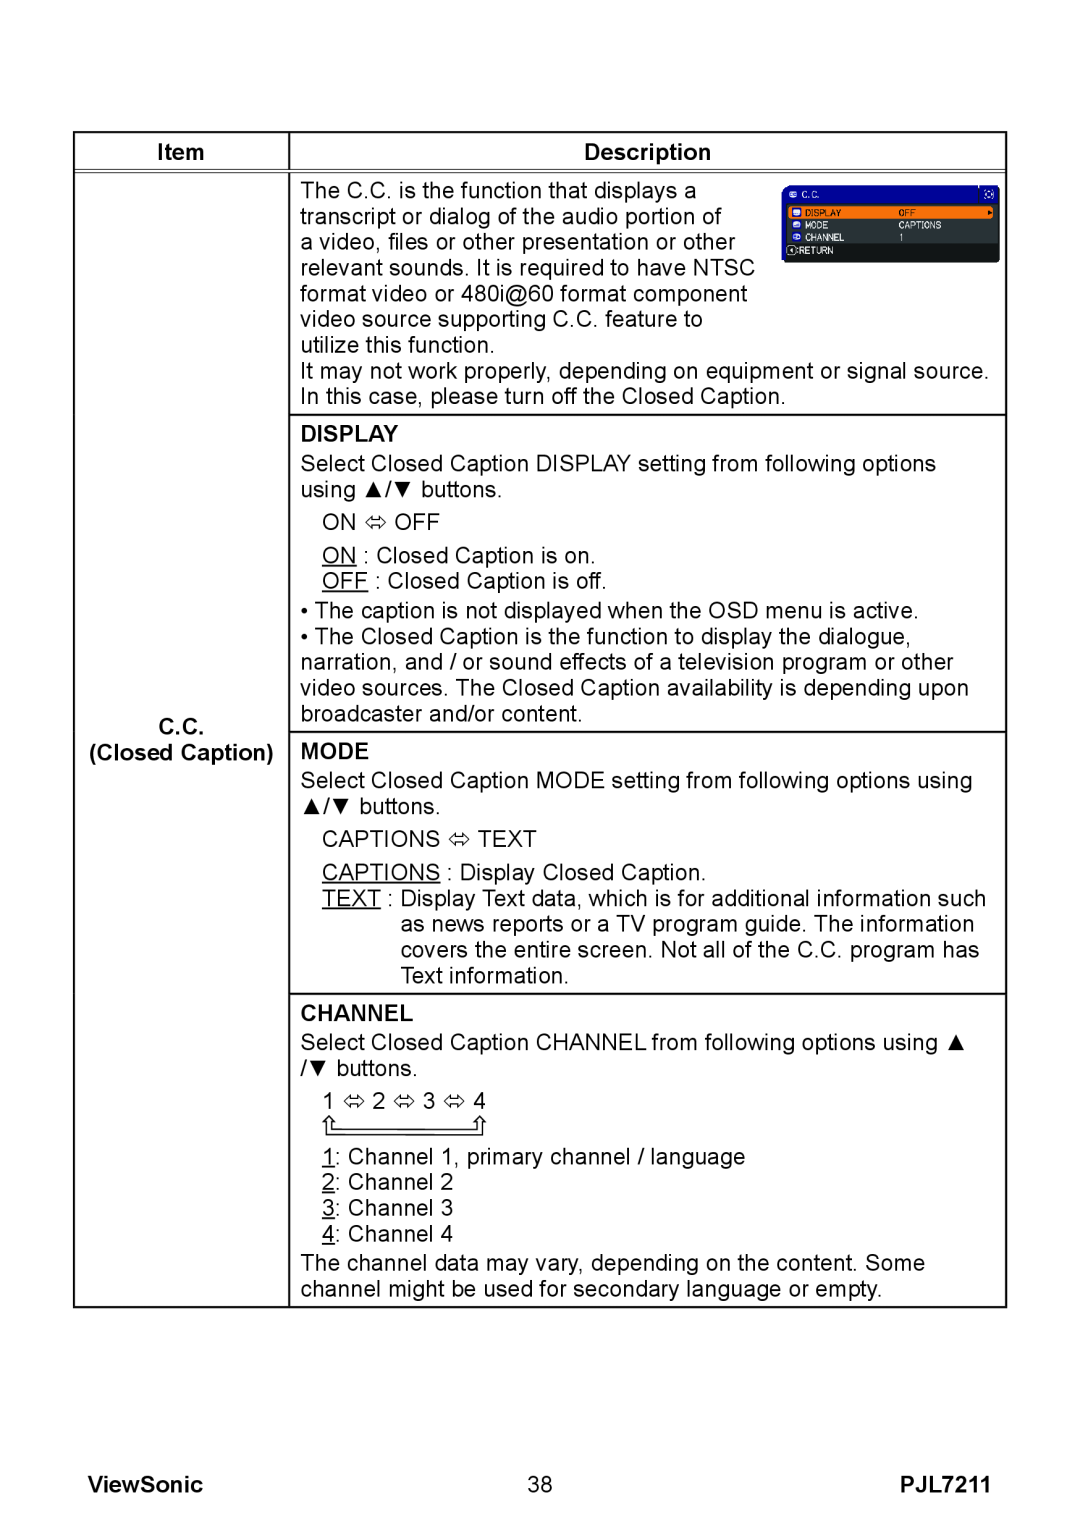 ViewSonic PJL7211 manual Item, Description, C.C Closed Caption, Display, Mode, Channel, ViewSonic 